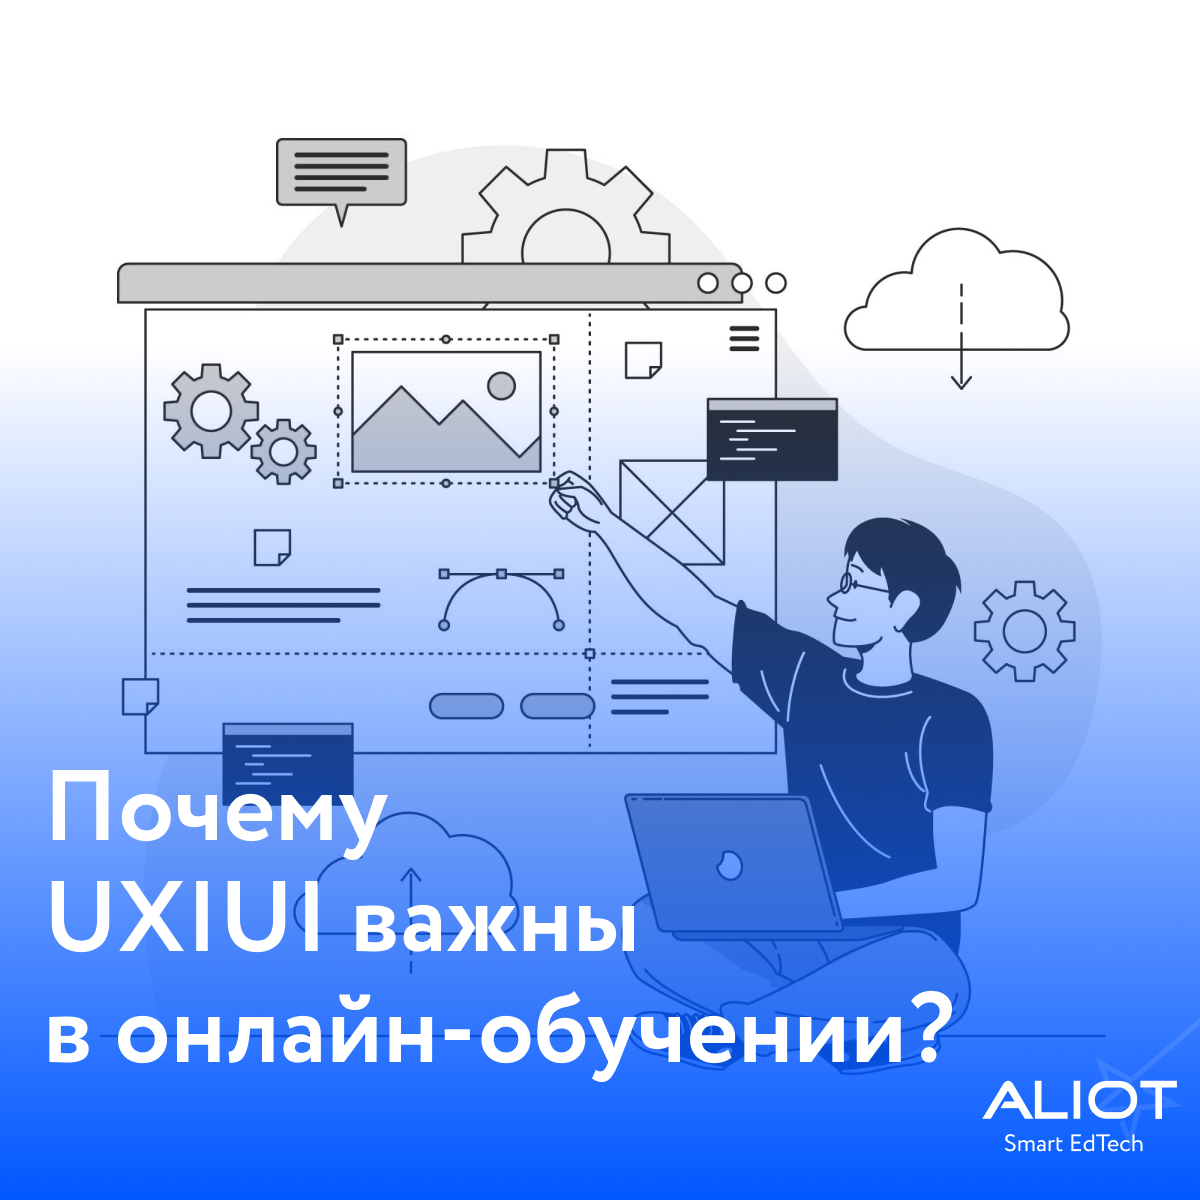 UX|UI в онлайн-обучении